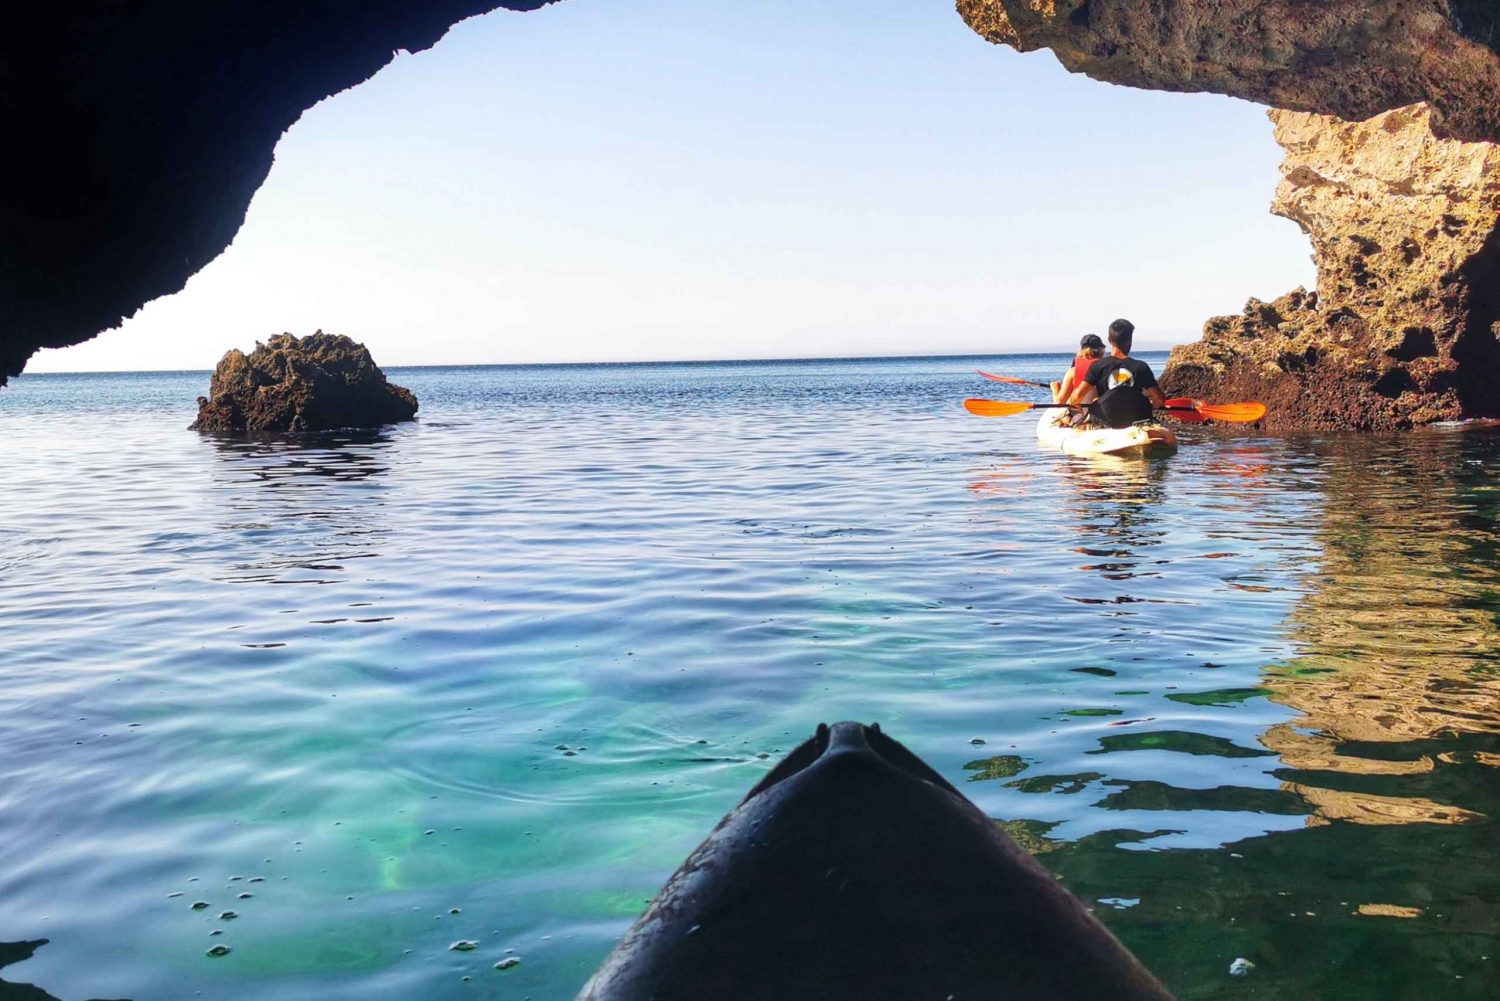 Raposeira: Guided Kayak Tour and Praia da Ingrina Caves